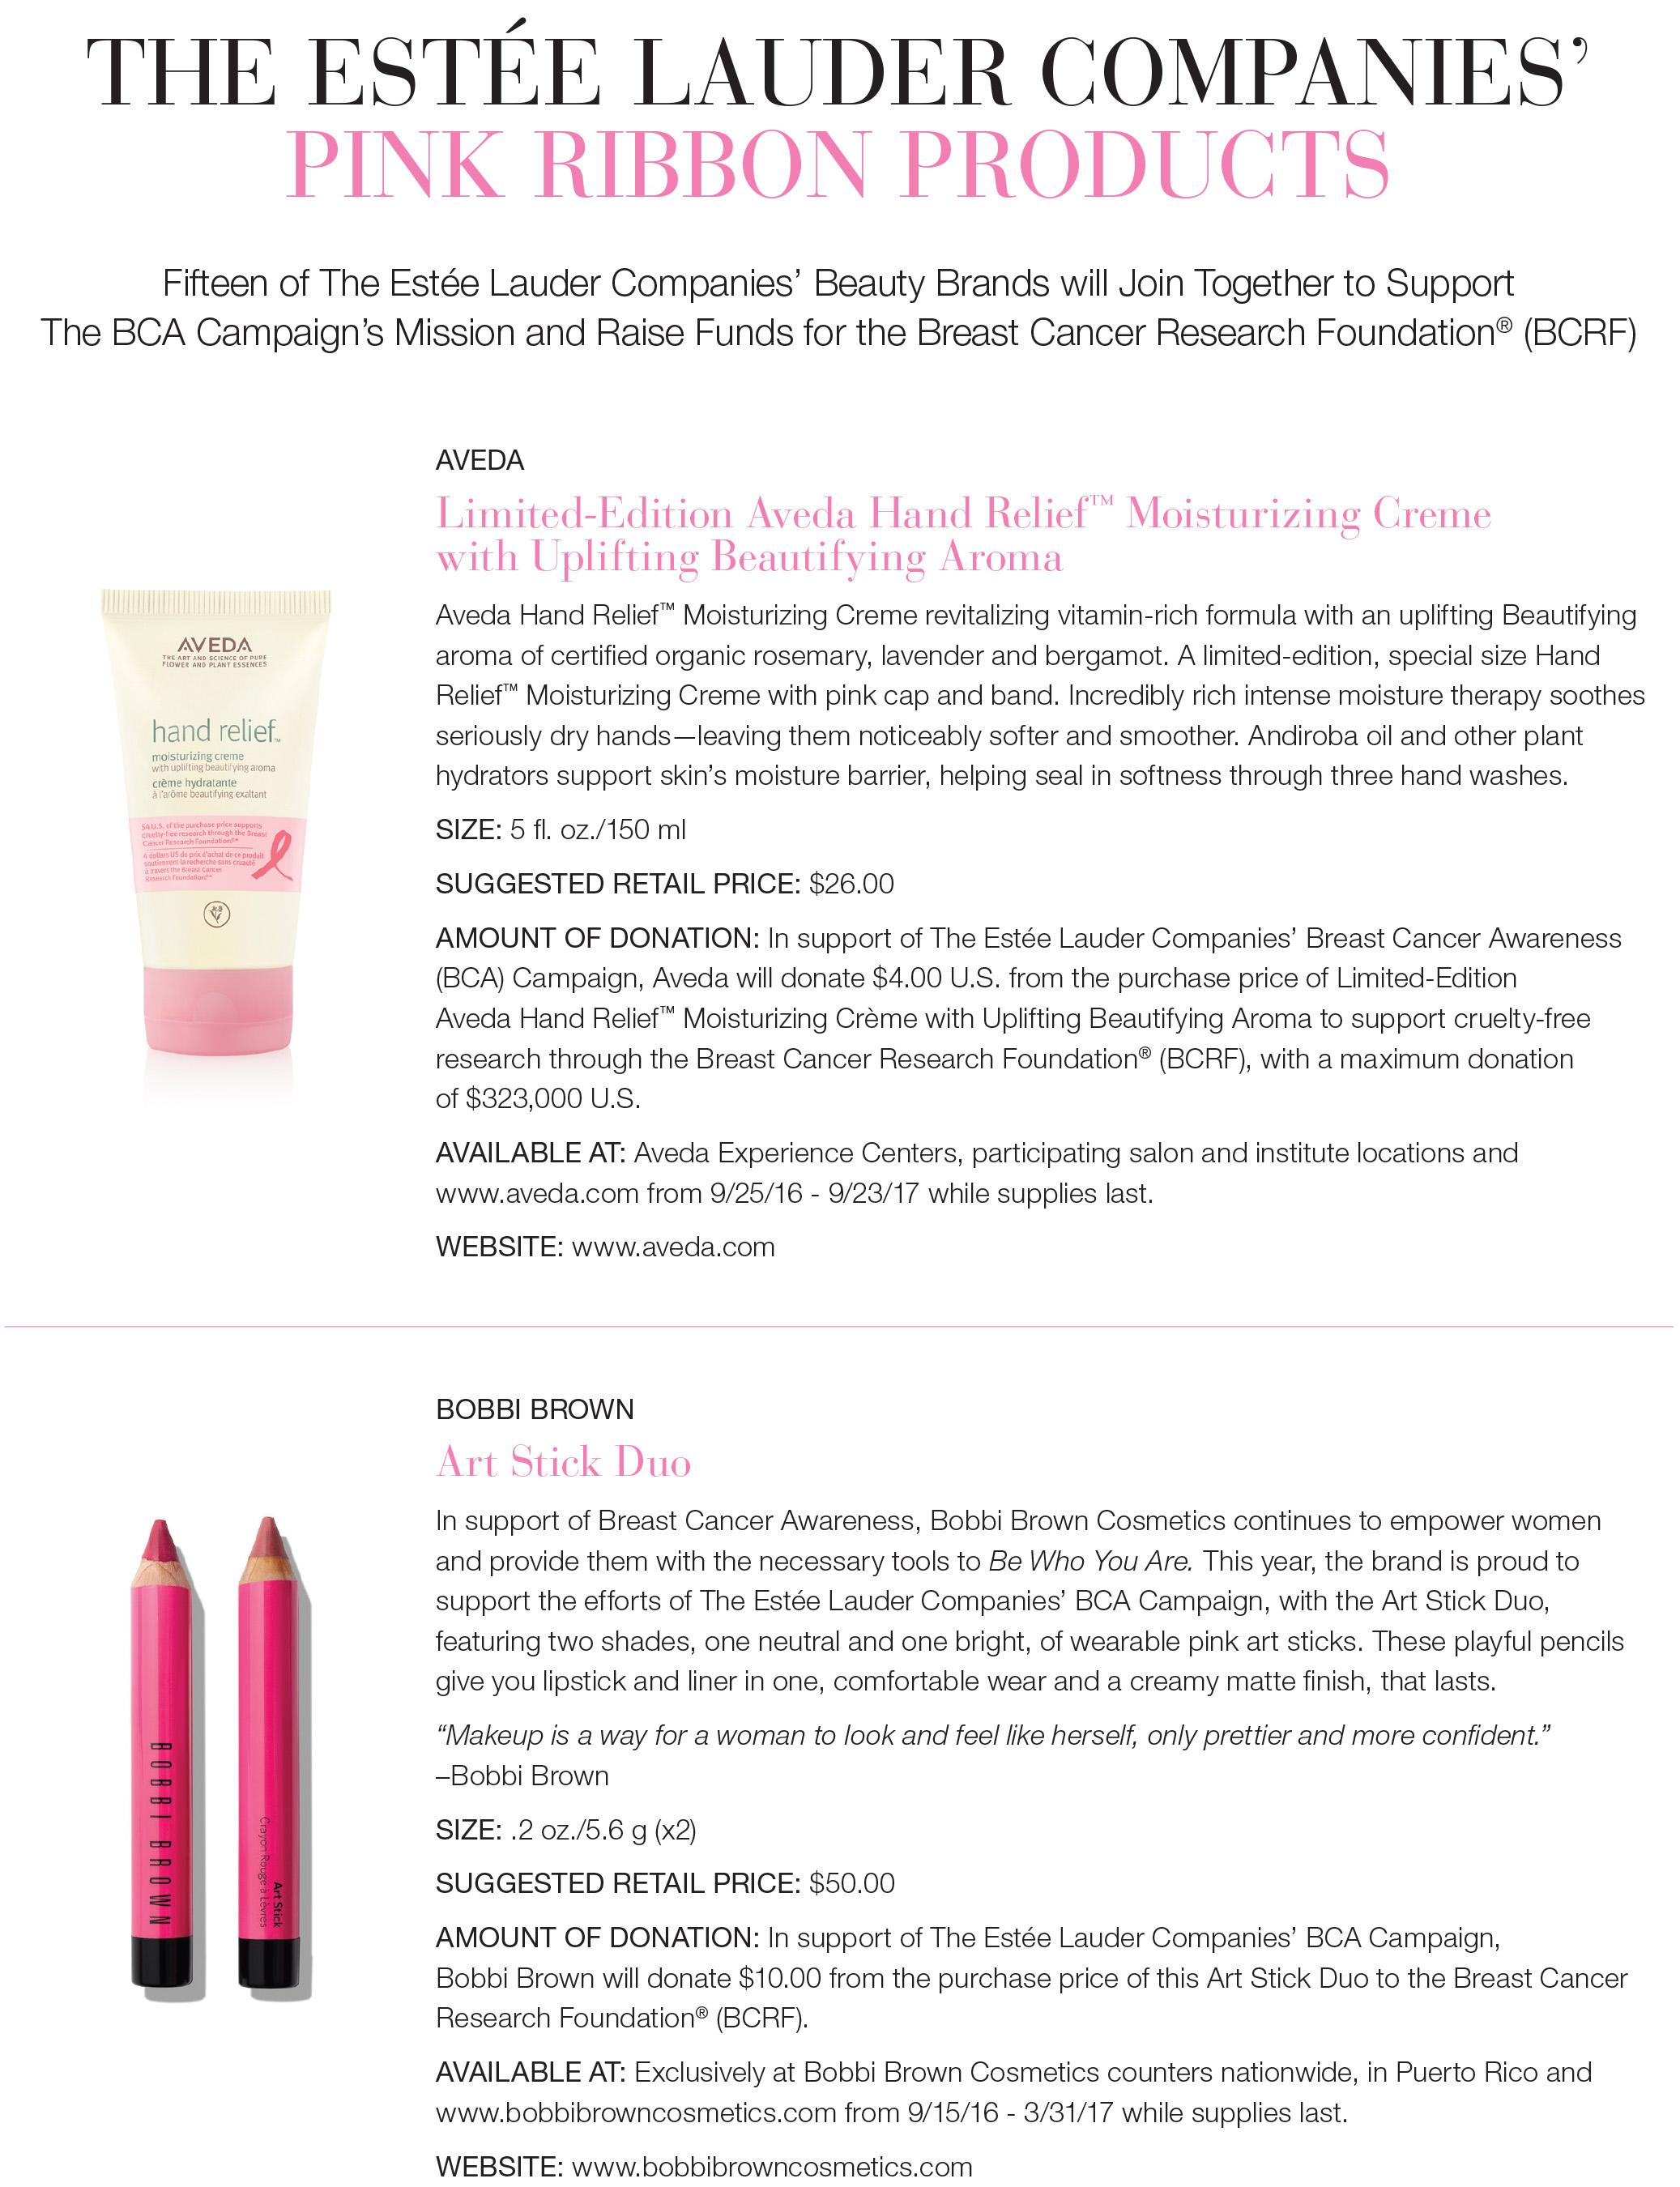 2016-pink-ribbon-product-fact-sheet-17-hr